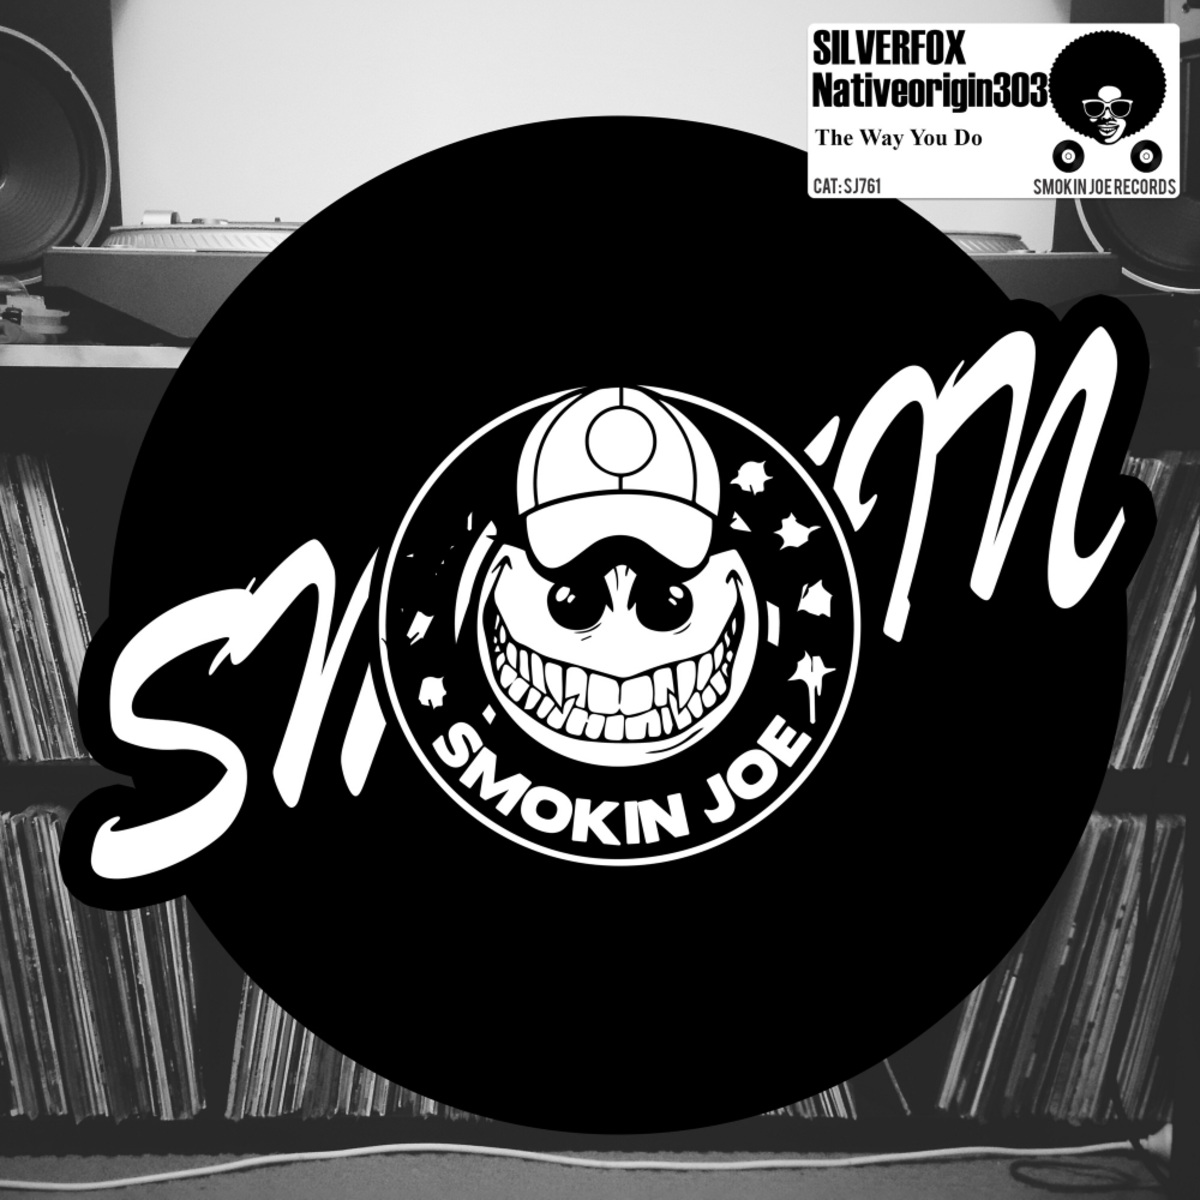 Silverfox & NativeOrigin303 - The Way We Do / Smokin Joe Records